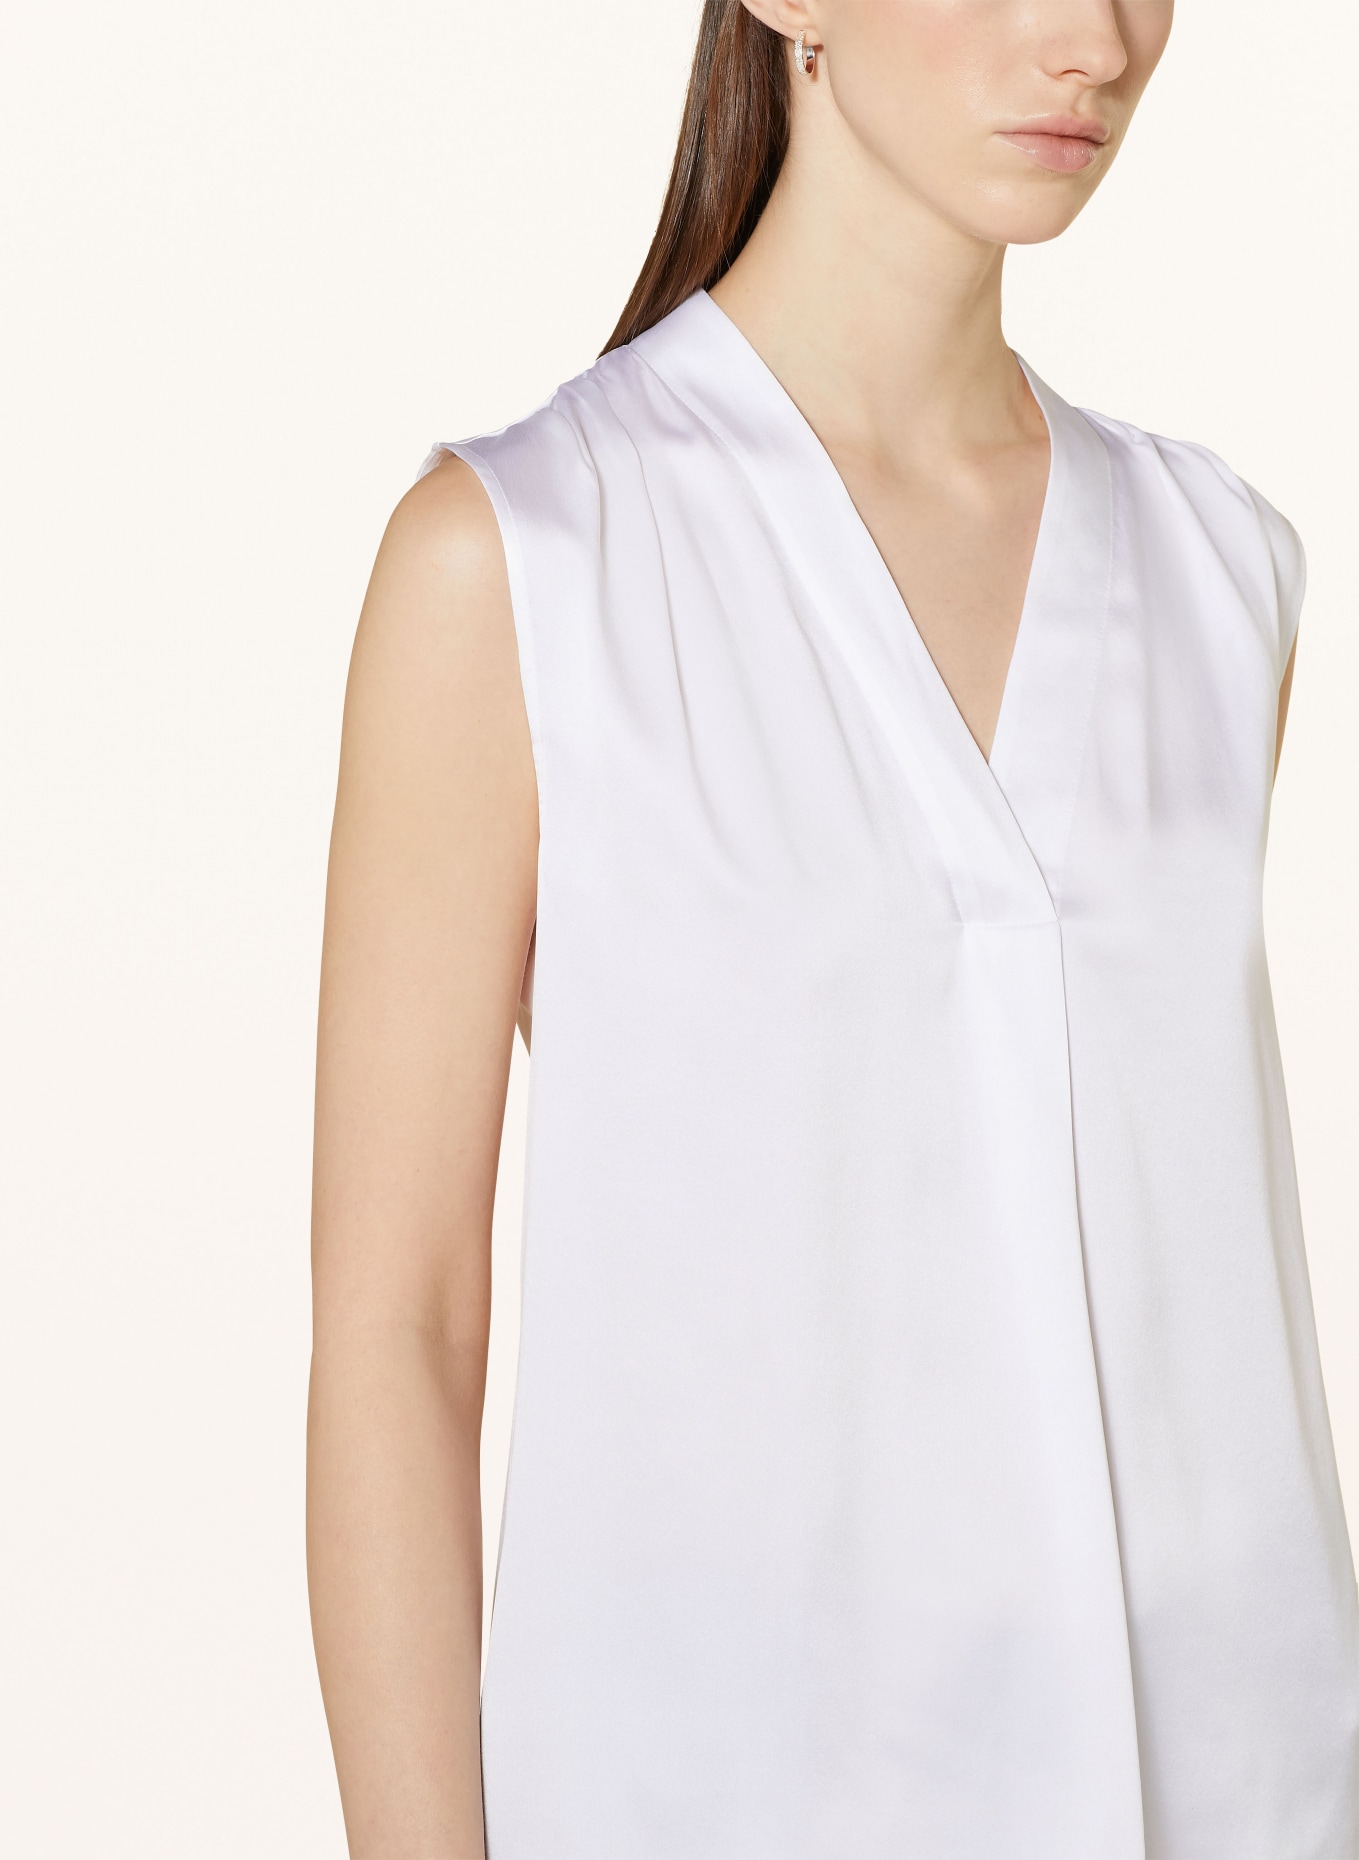 HERZEN'S ANGELEGENHEIT Blouse top made of silk, Color: WHITE (Image 4)